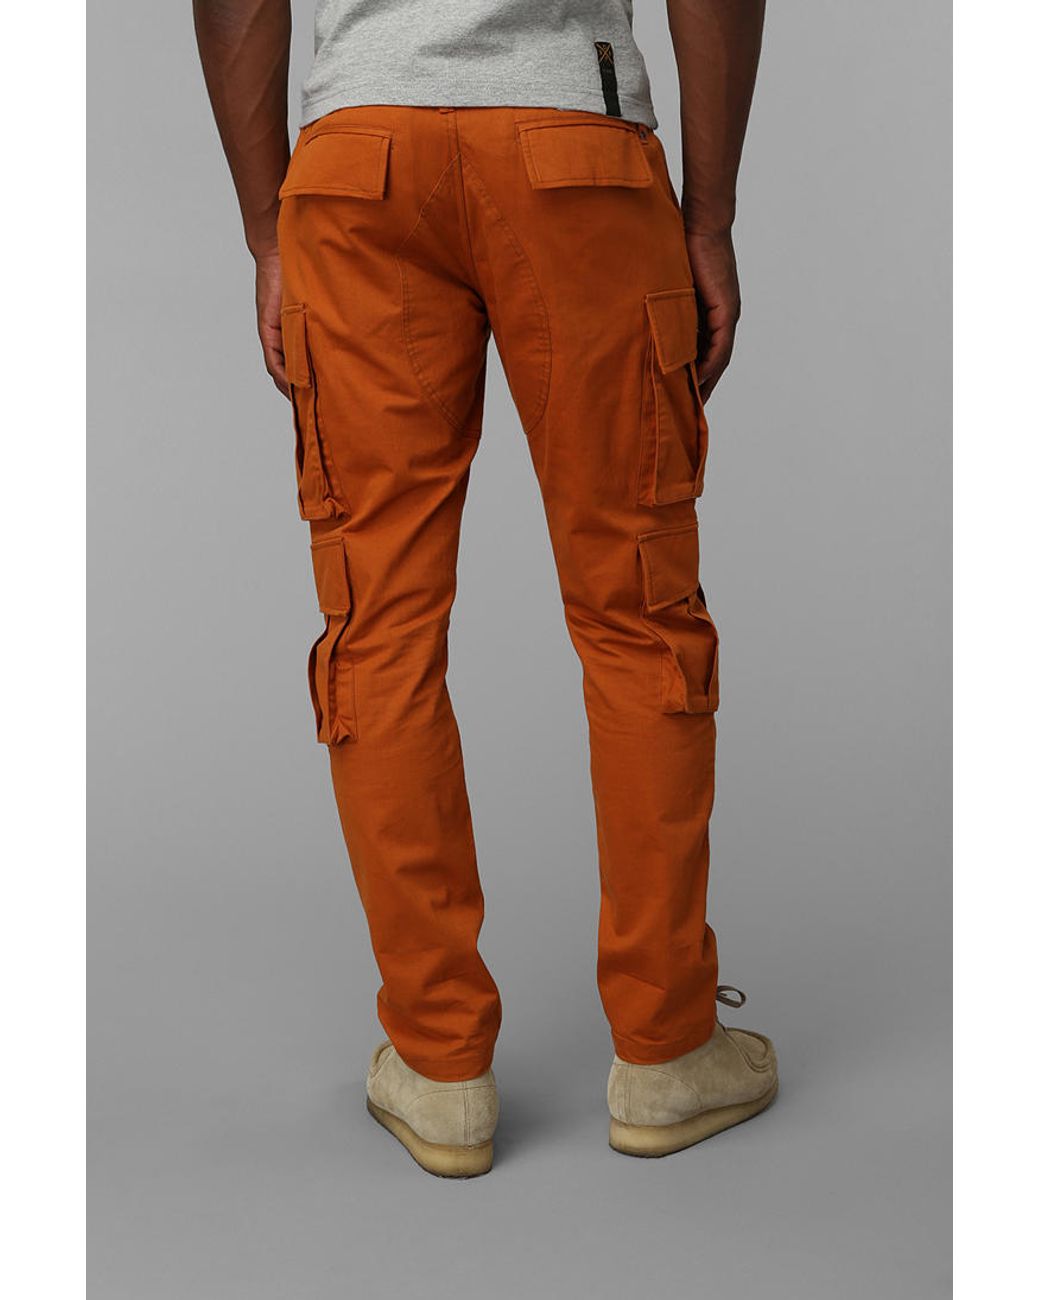 Urban Outfitters Publish Avenir Cargo Pant in Orange for Men  Lyst